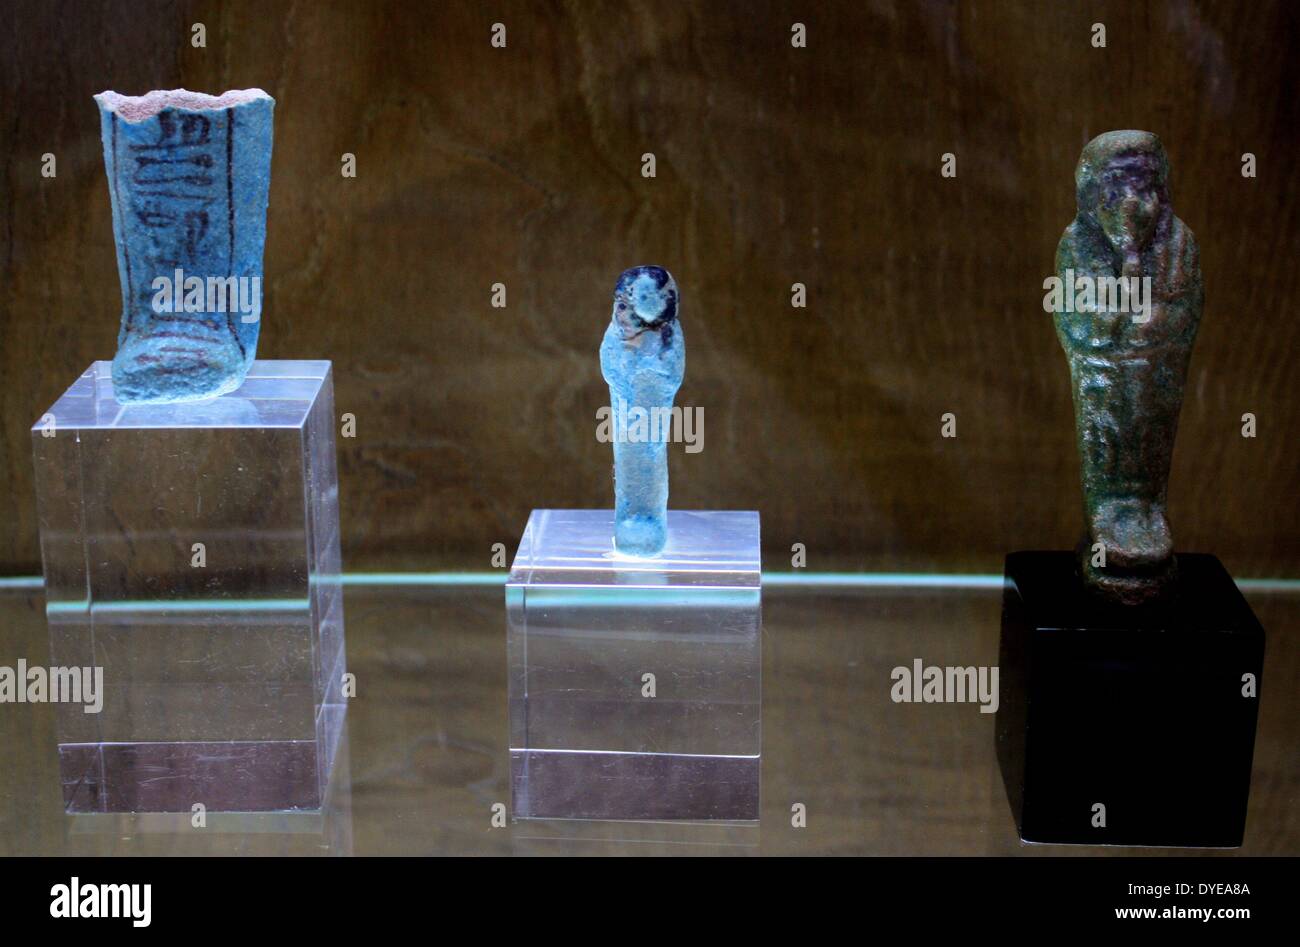 Objetos nativos de Egipto creada a partir de la piedra preciosa semi- lapislázuli. Colección de mini sarcófagos. Barcelona. España 2013 Foto de stock